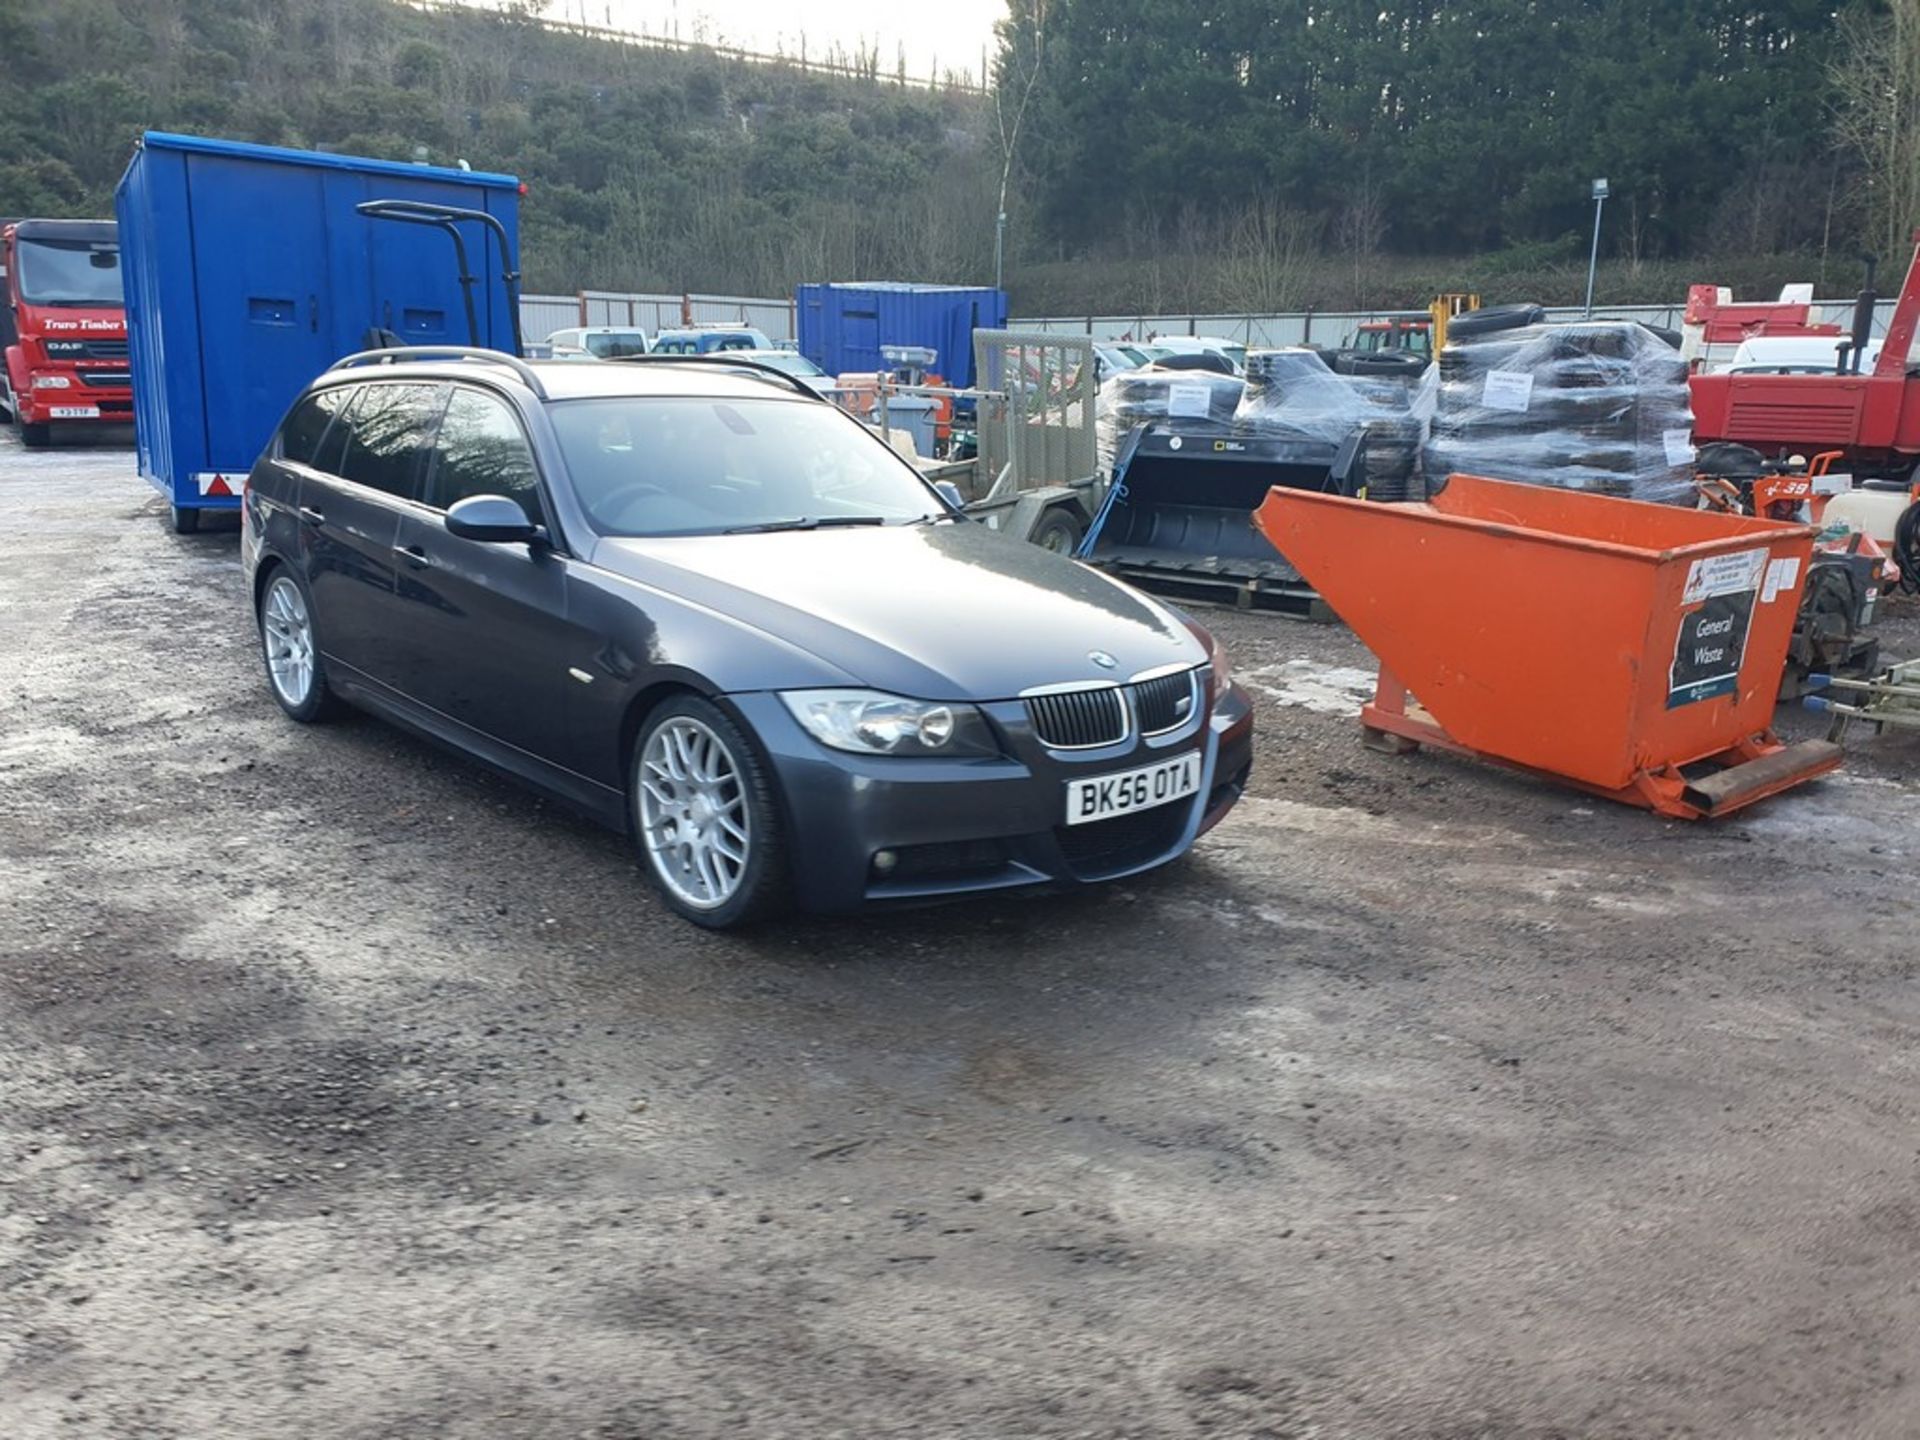 06/56 BMW 325I M SPORT TOURING AUTO - 2497cc 5dr Estate (Grey, 178k) - Image 4 of 44